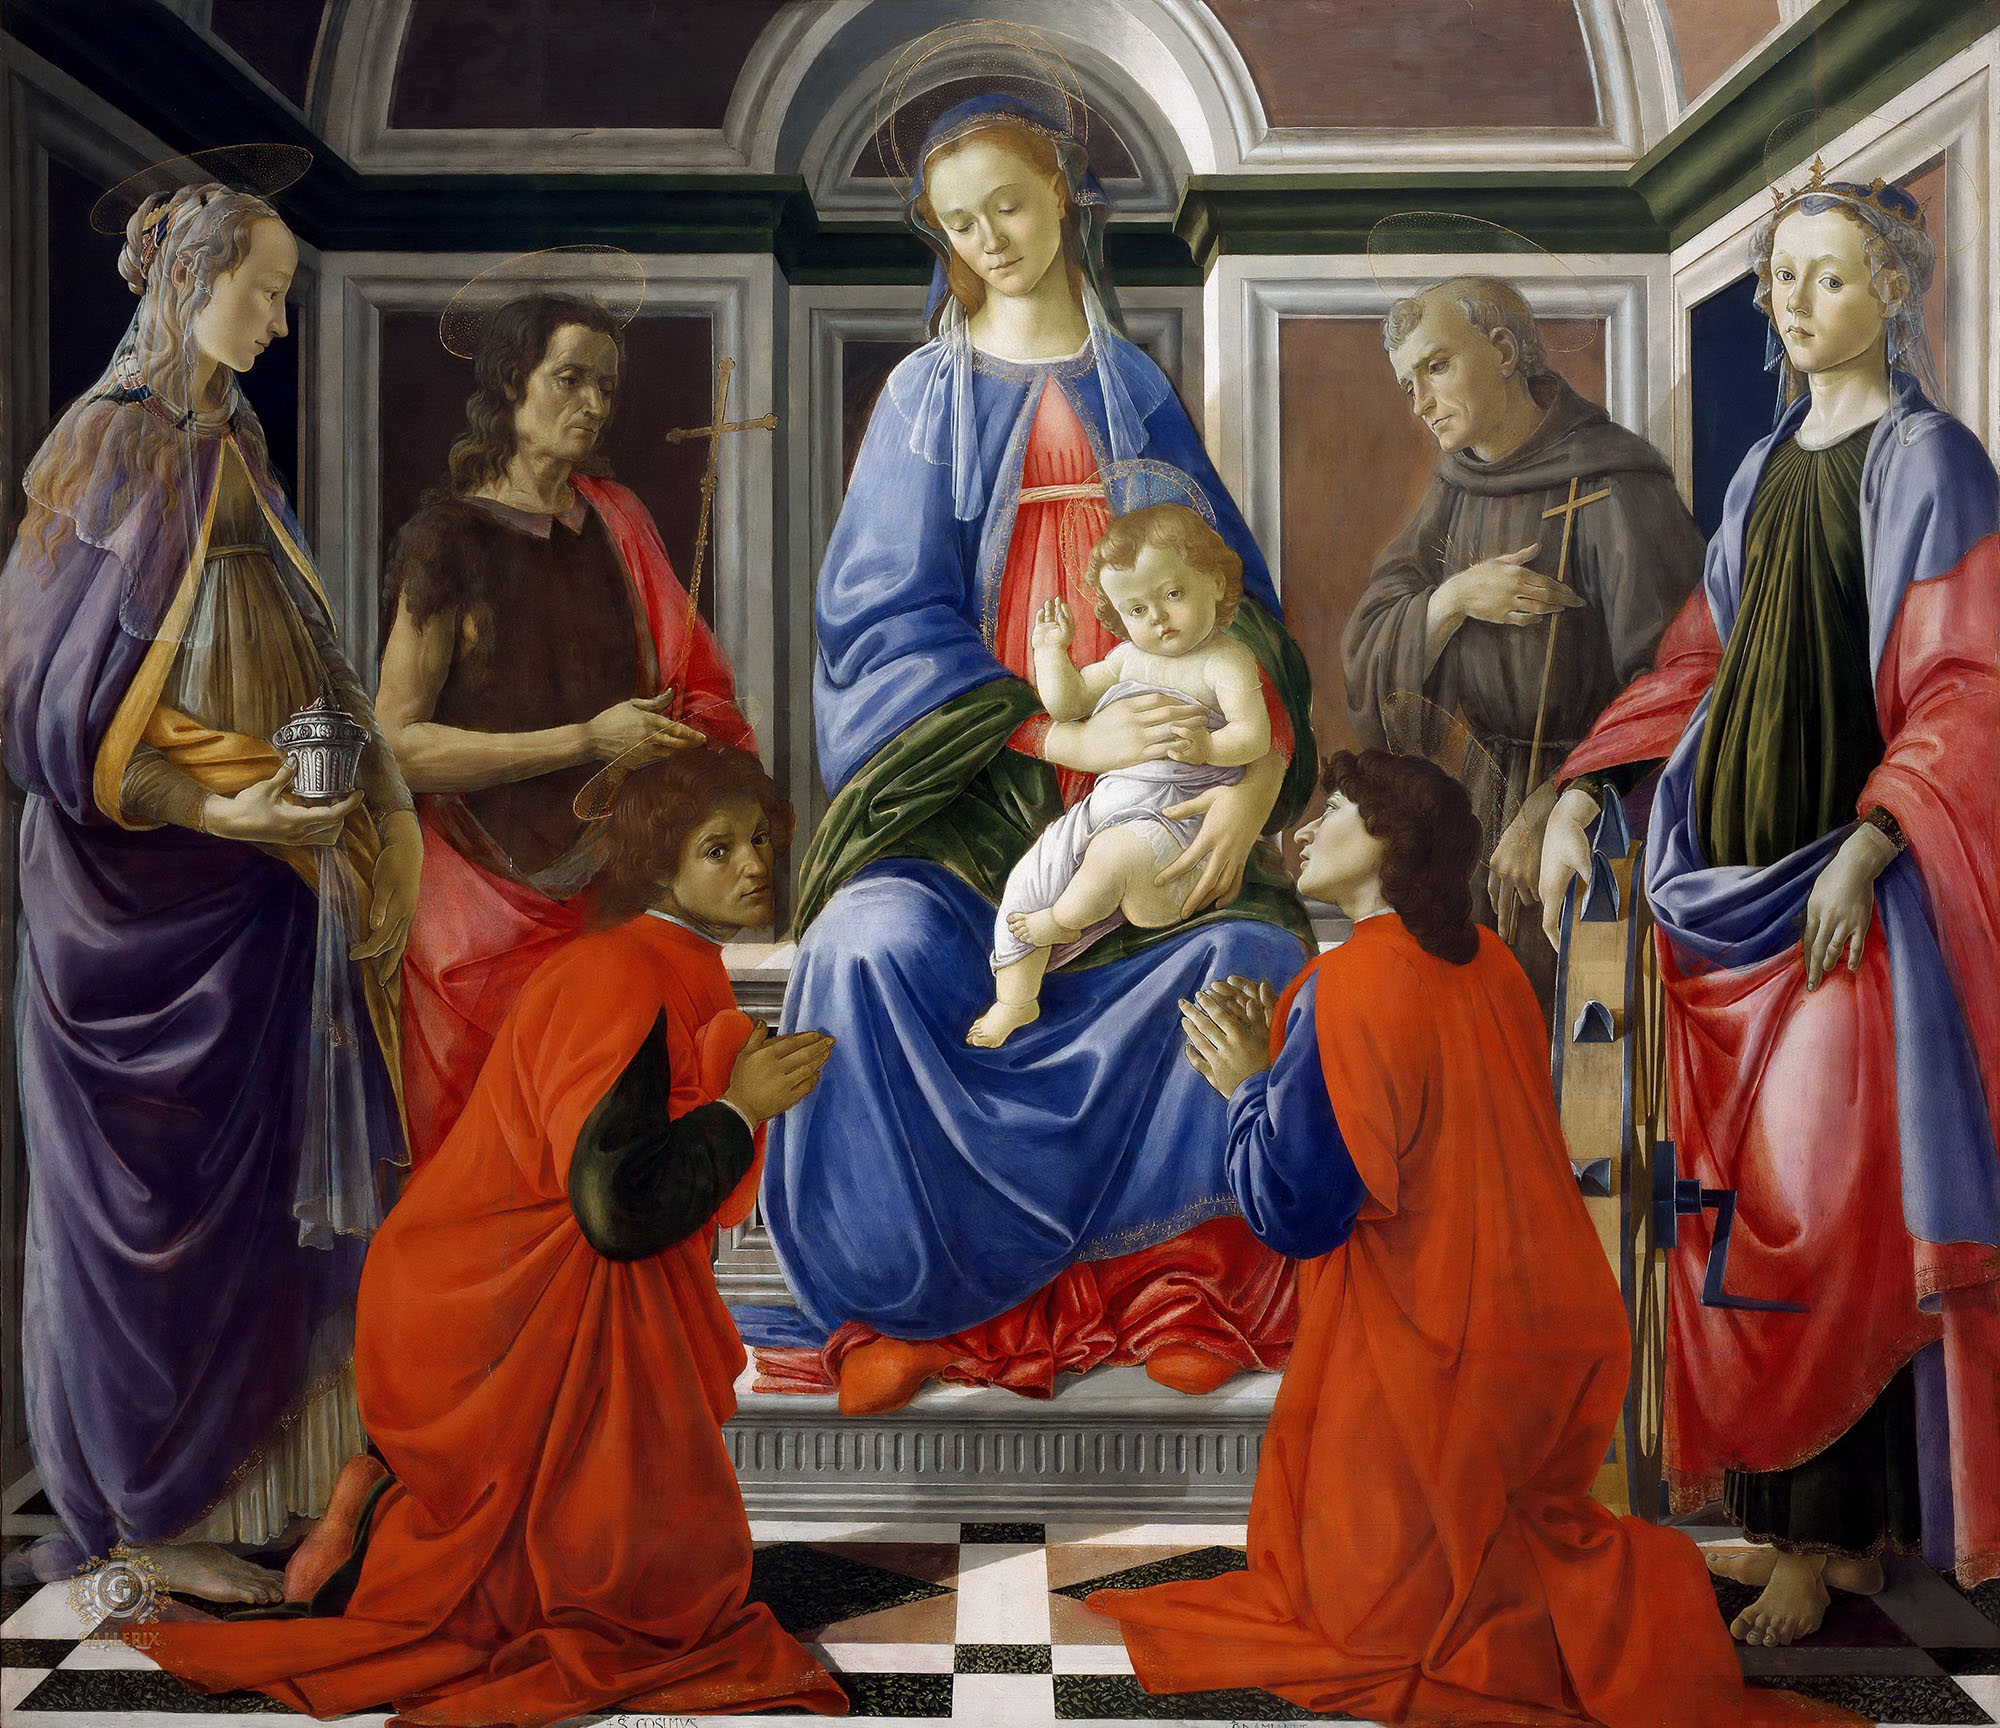 Сандро Боттичелли. "Мадонна с Младенцем и шестью святыми". Около 1470. Галерея Уффици, Флоренция.